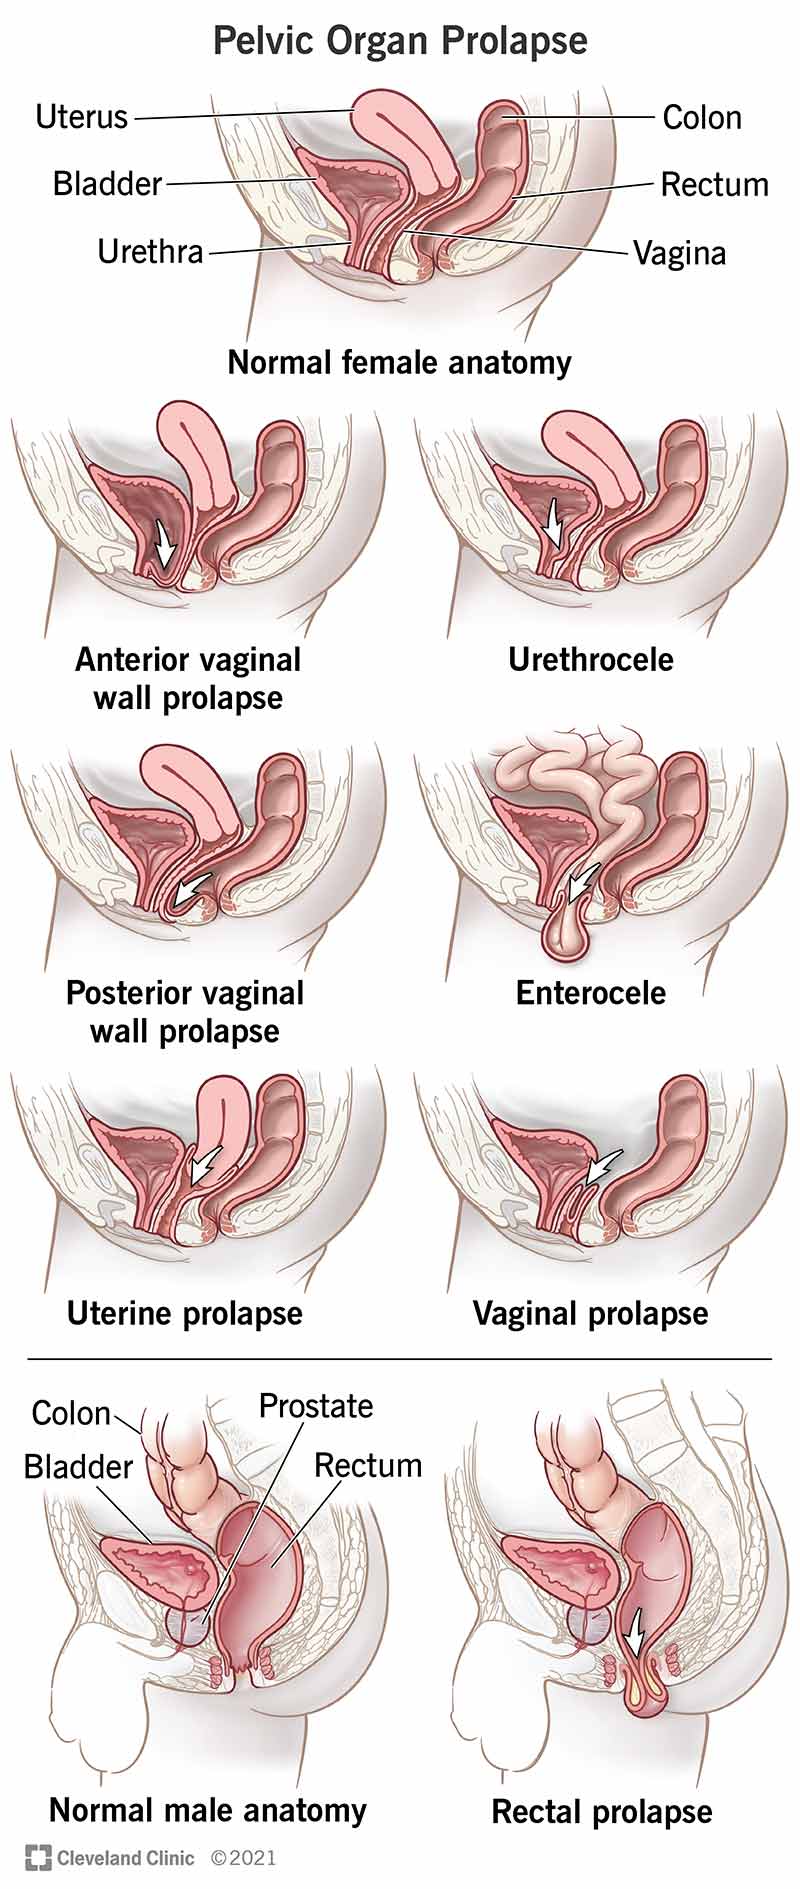 Pelvic organ prolapse involving the bladder, urethra, rectum, small intestine, uterus and vagina